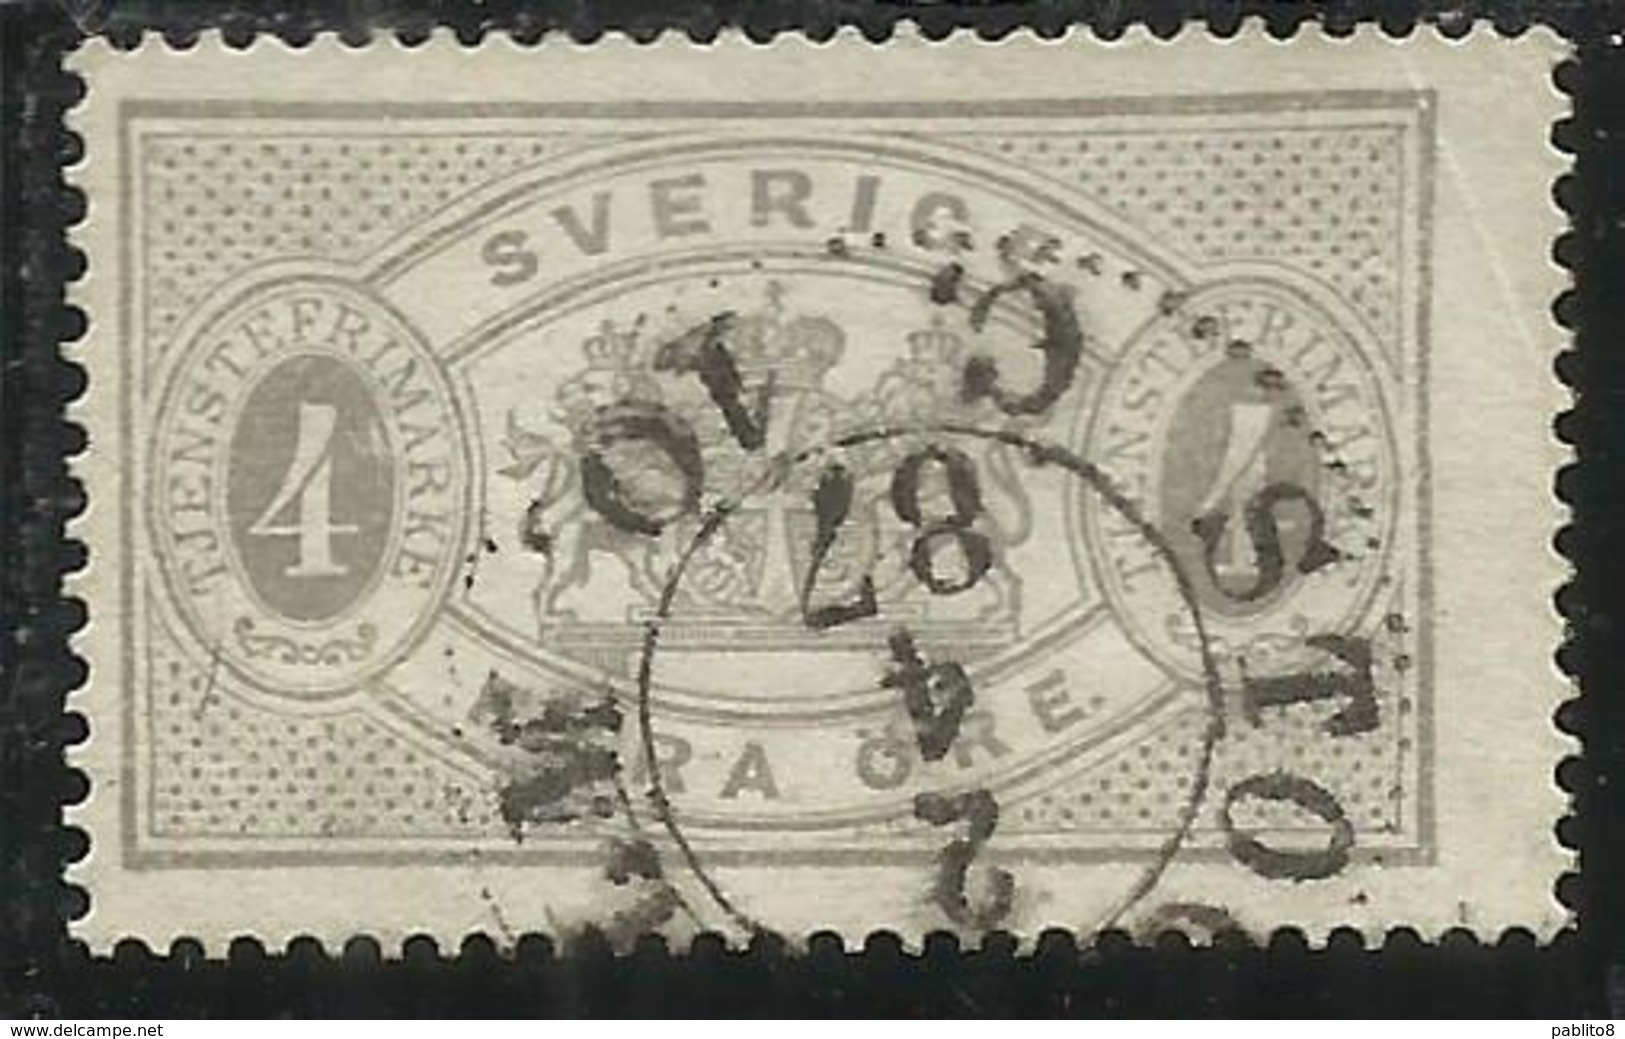 SWEDEN SVERIGE SVEZIA SUEDE 1874 1877 OFFICIAL STAMPS ORE 4o USATO USED OBLITERE' - Steuermarken